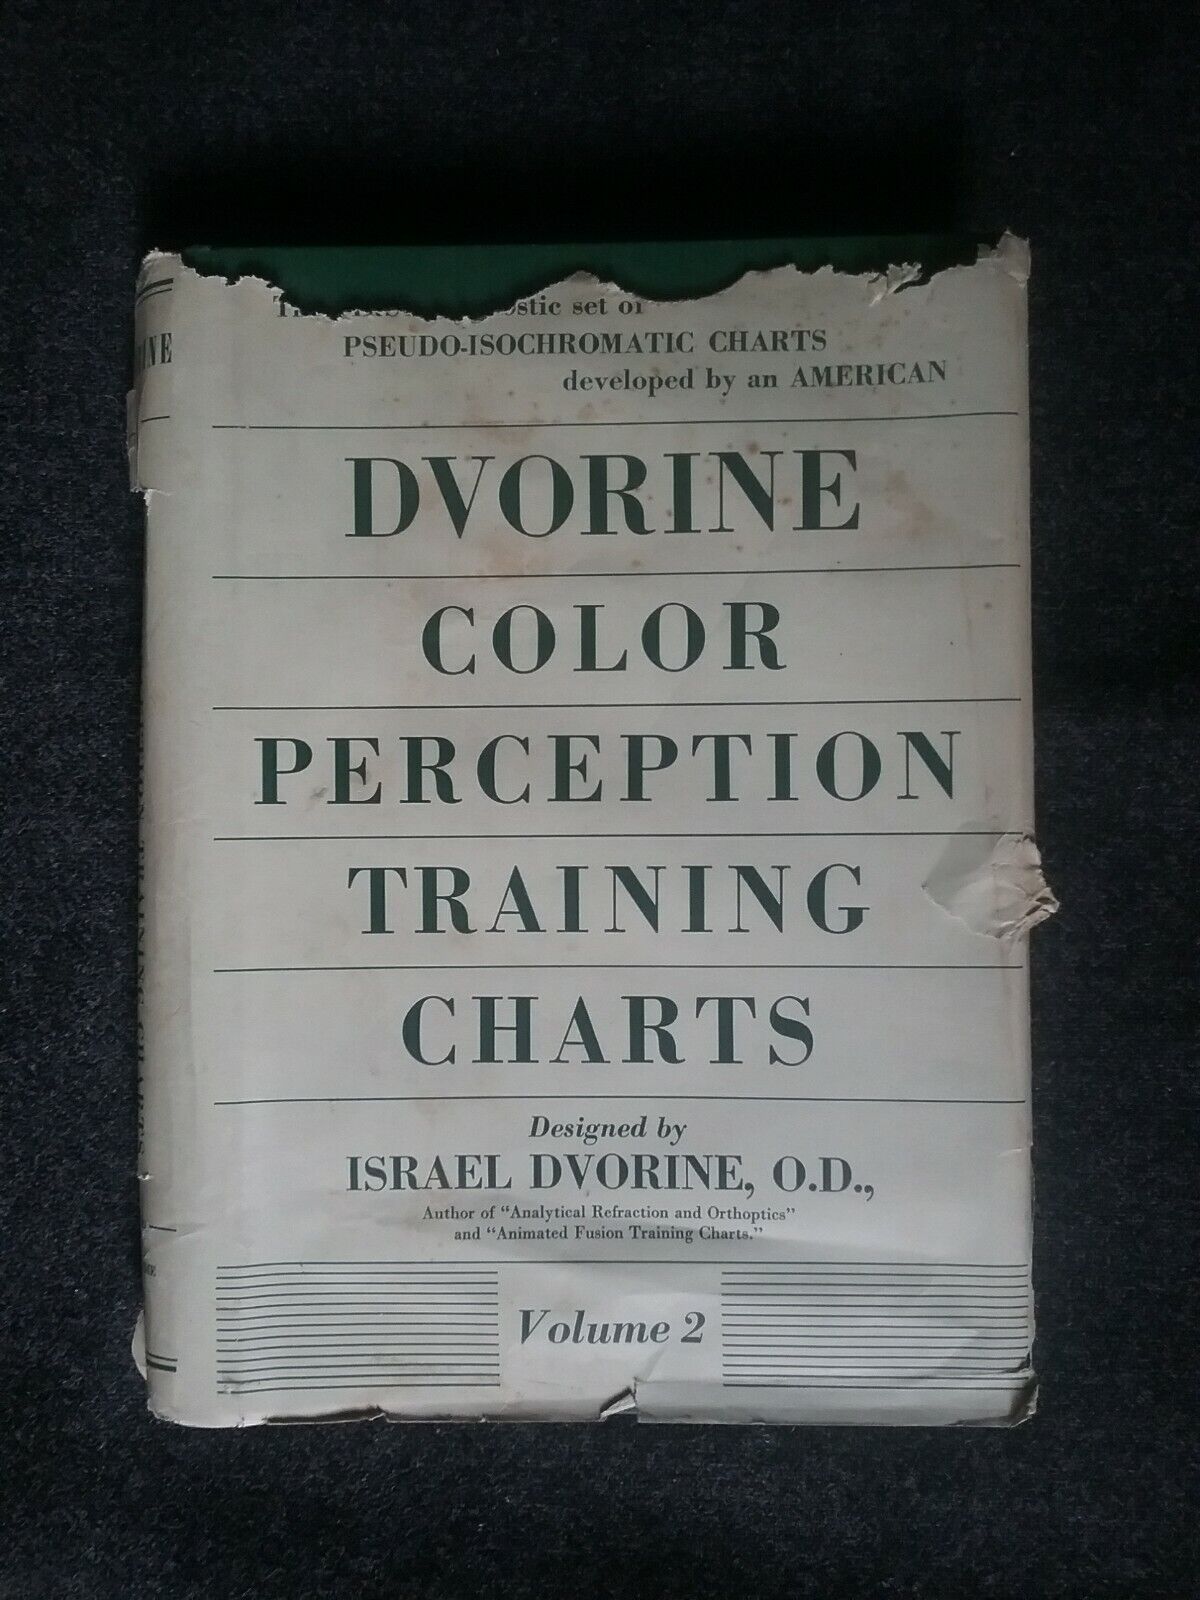 Dvorine Color Perception Training Charts book Vol 2 Ophthamology Eye Doctor